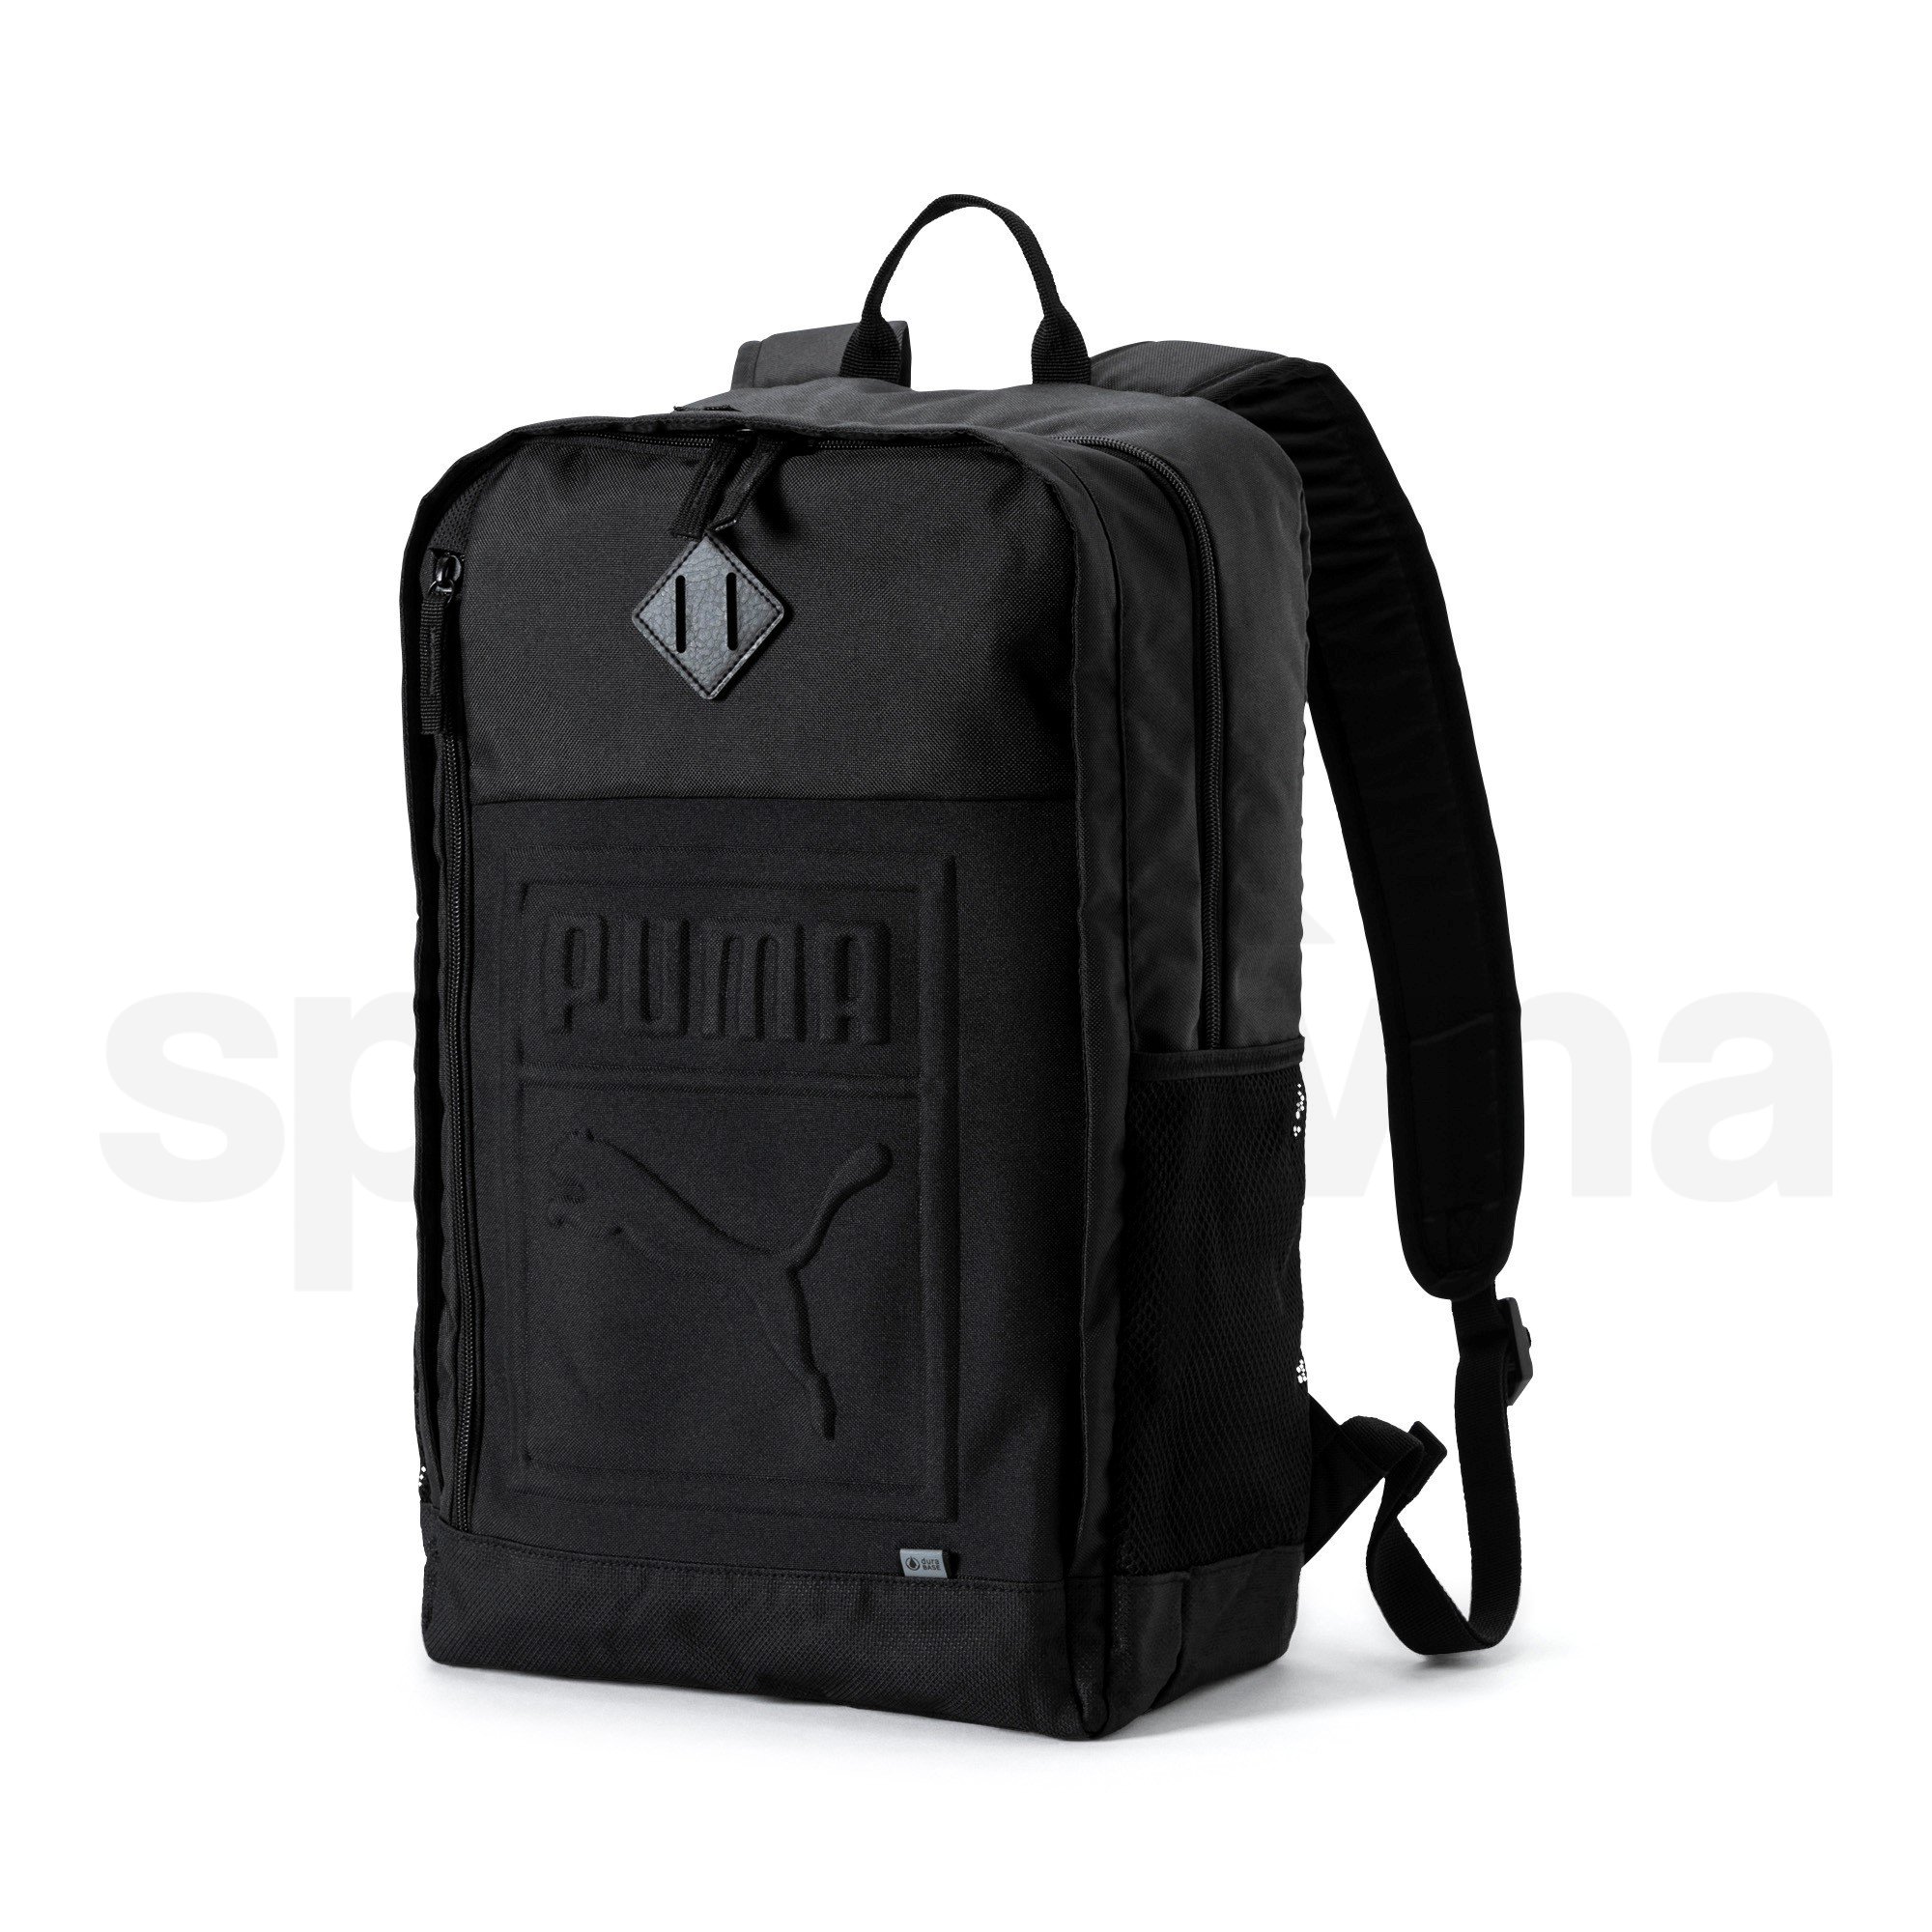 Batoh Puma S Backpack - černá